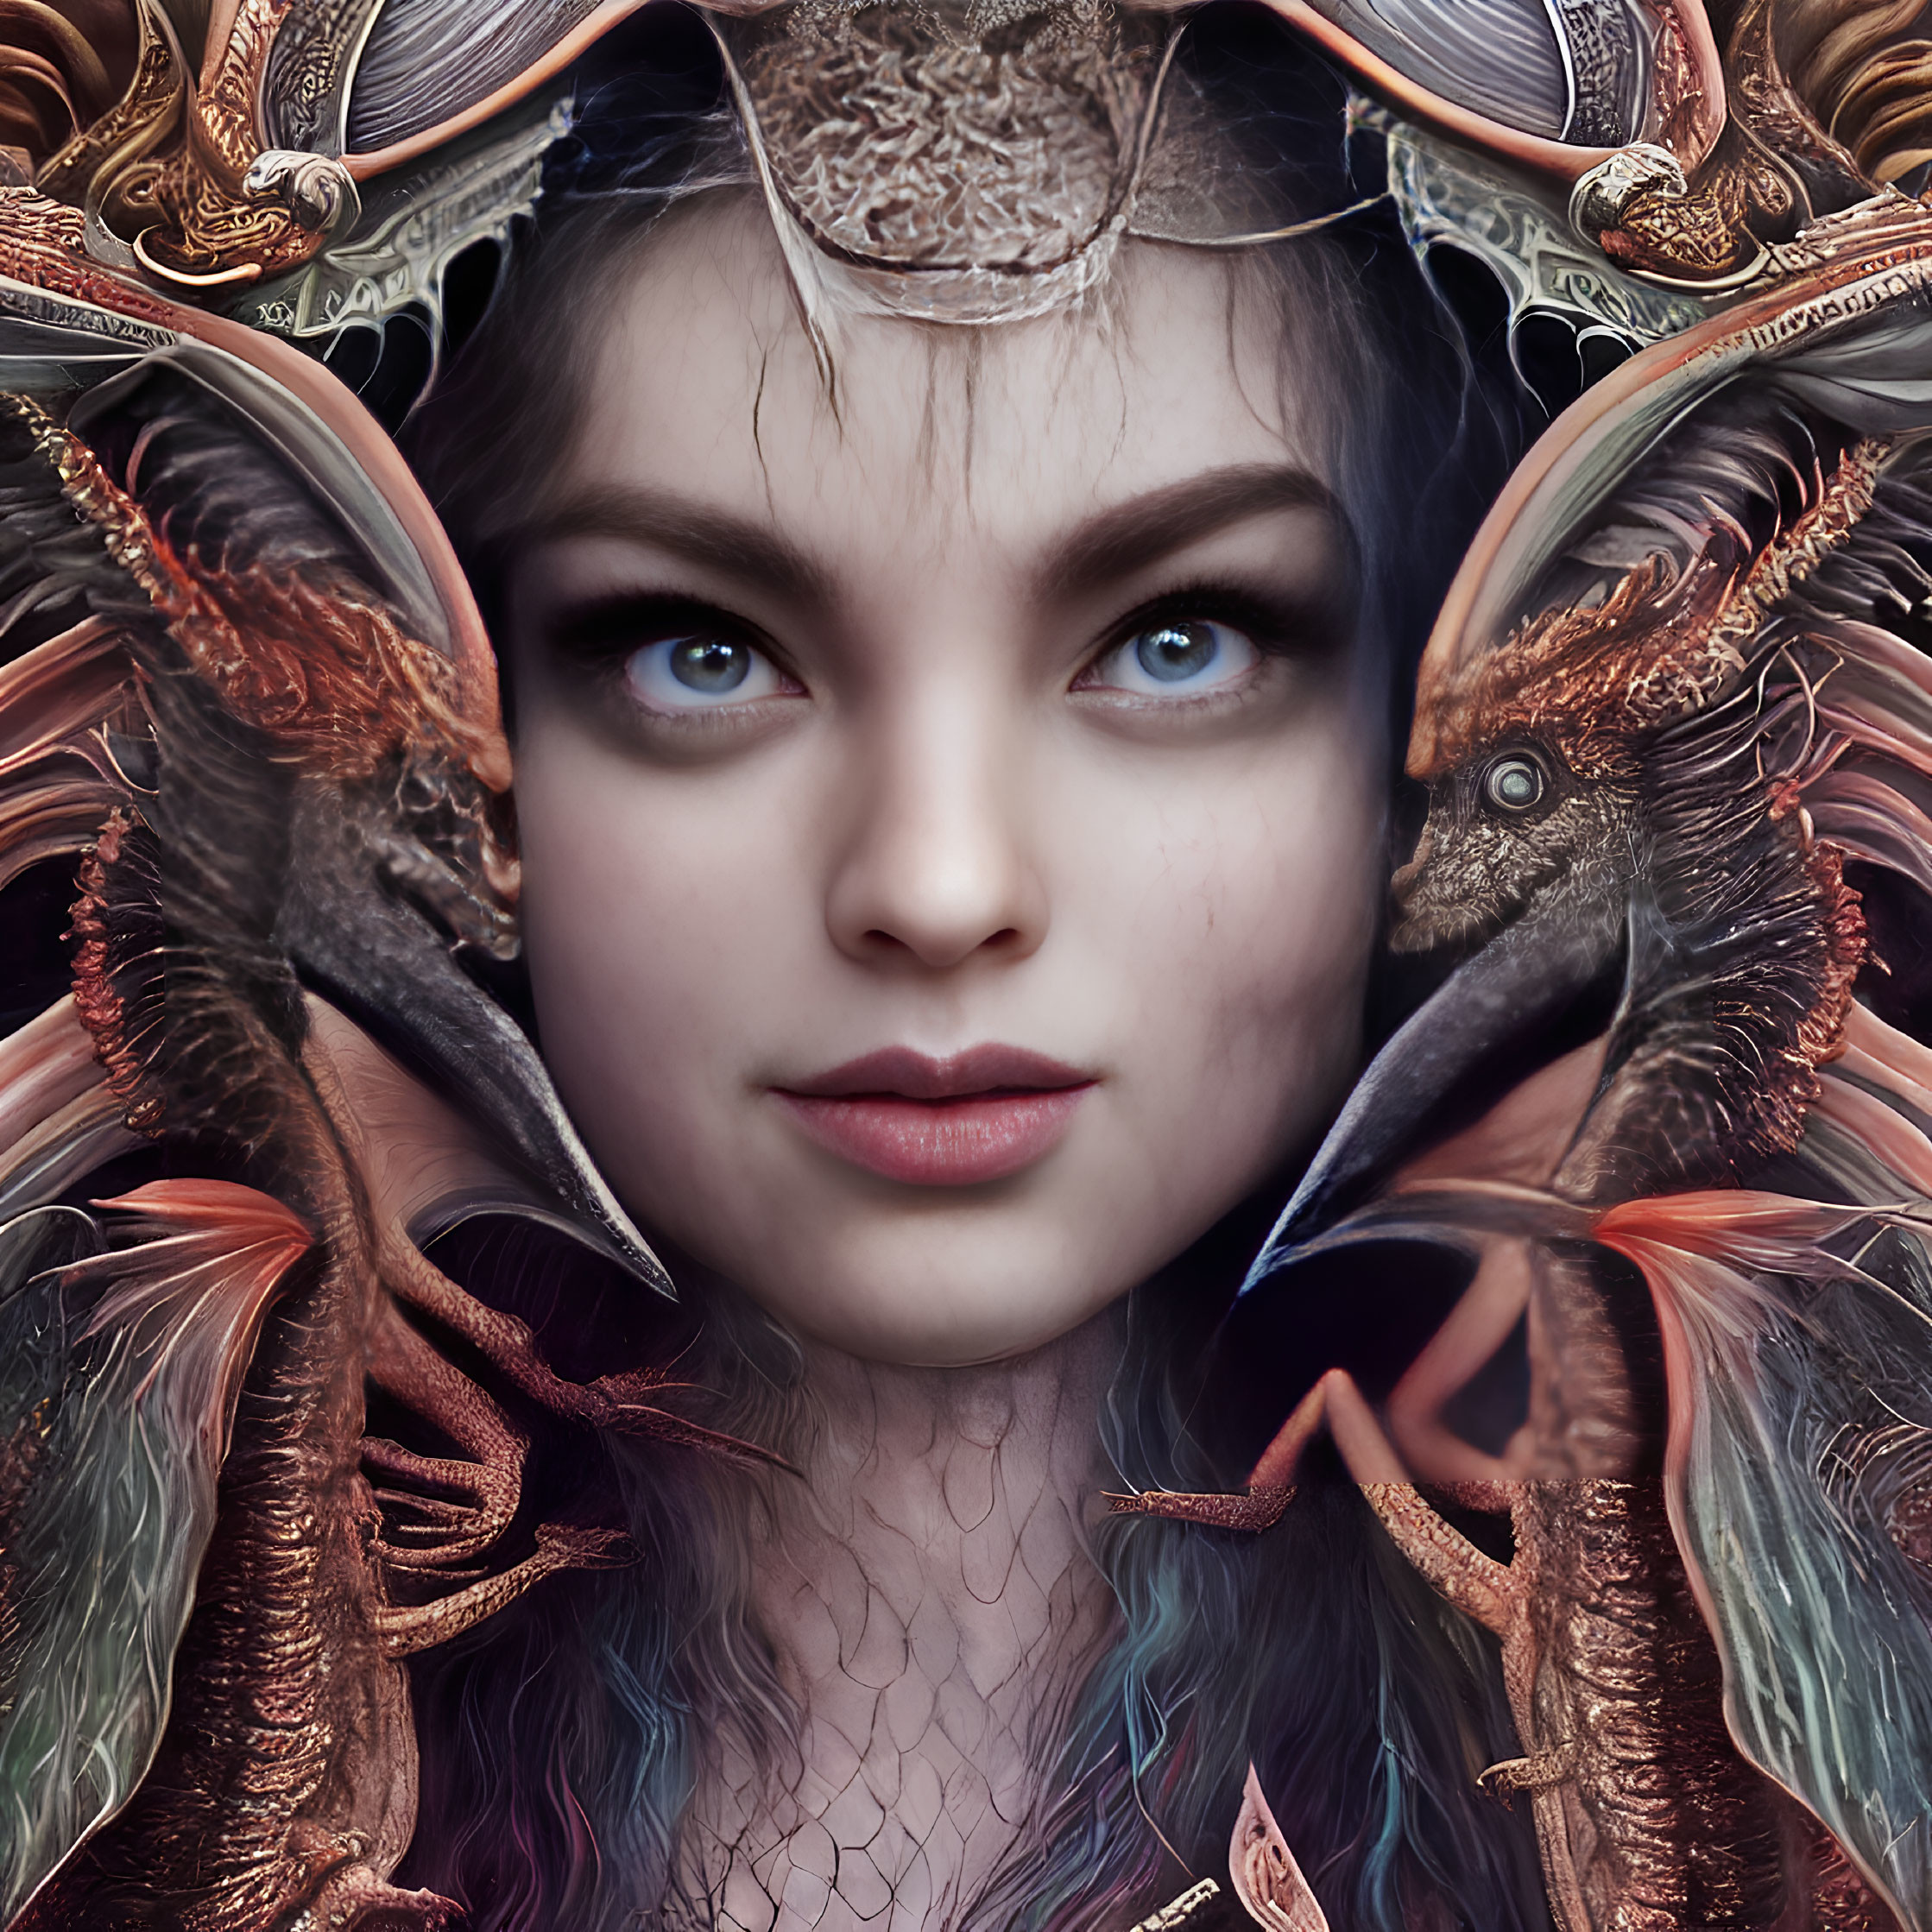 Intricate dragon-themed headdress on captivating woman artwork